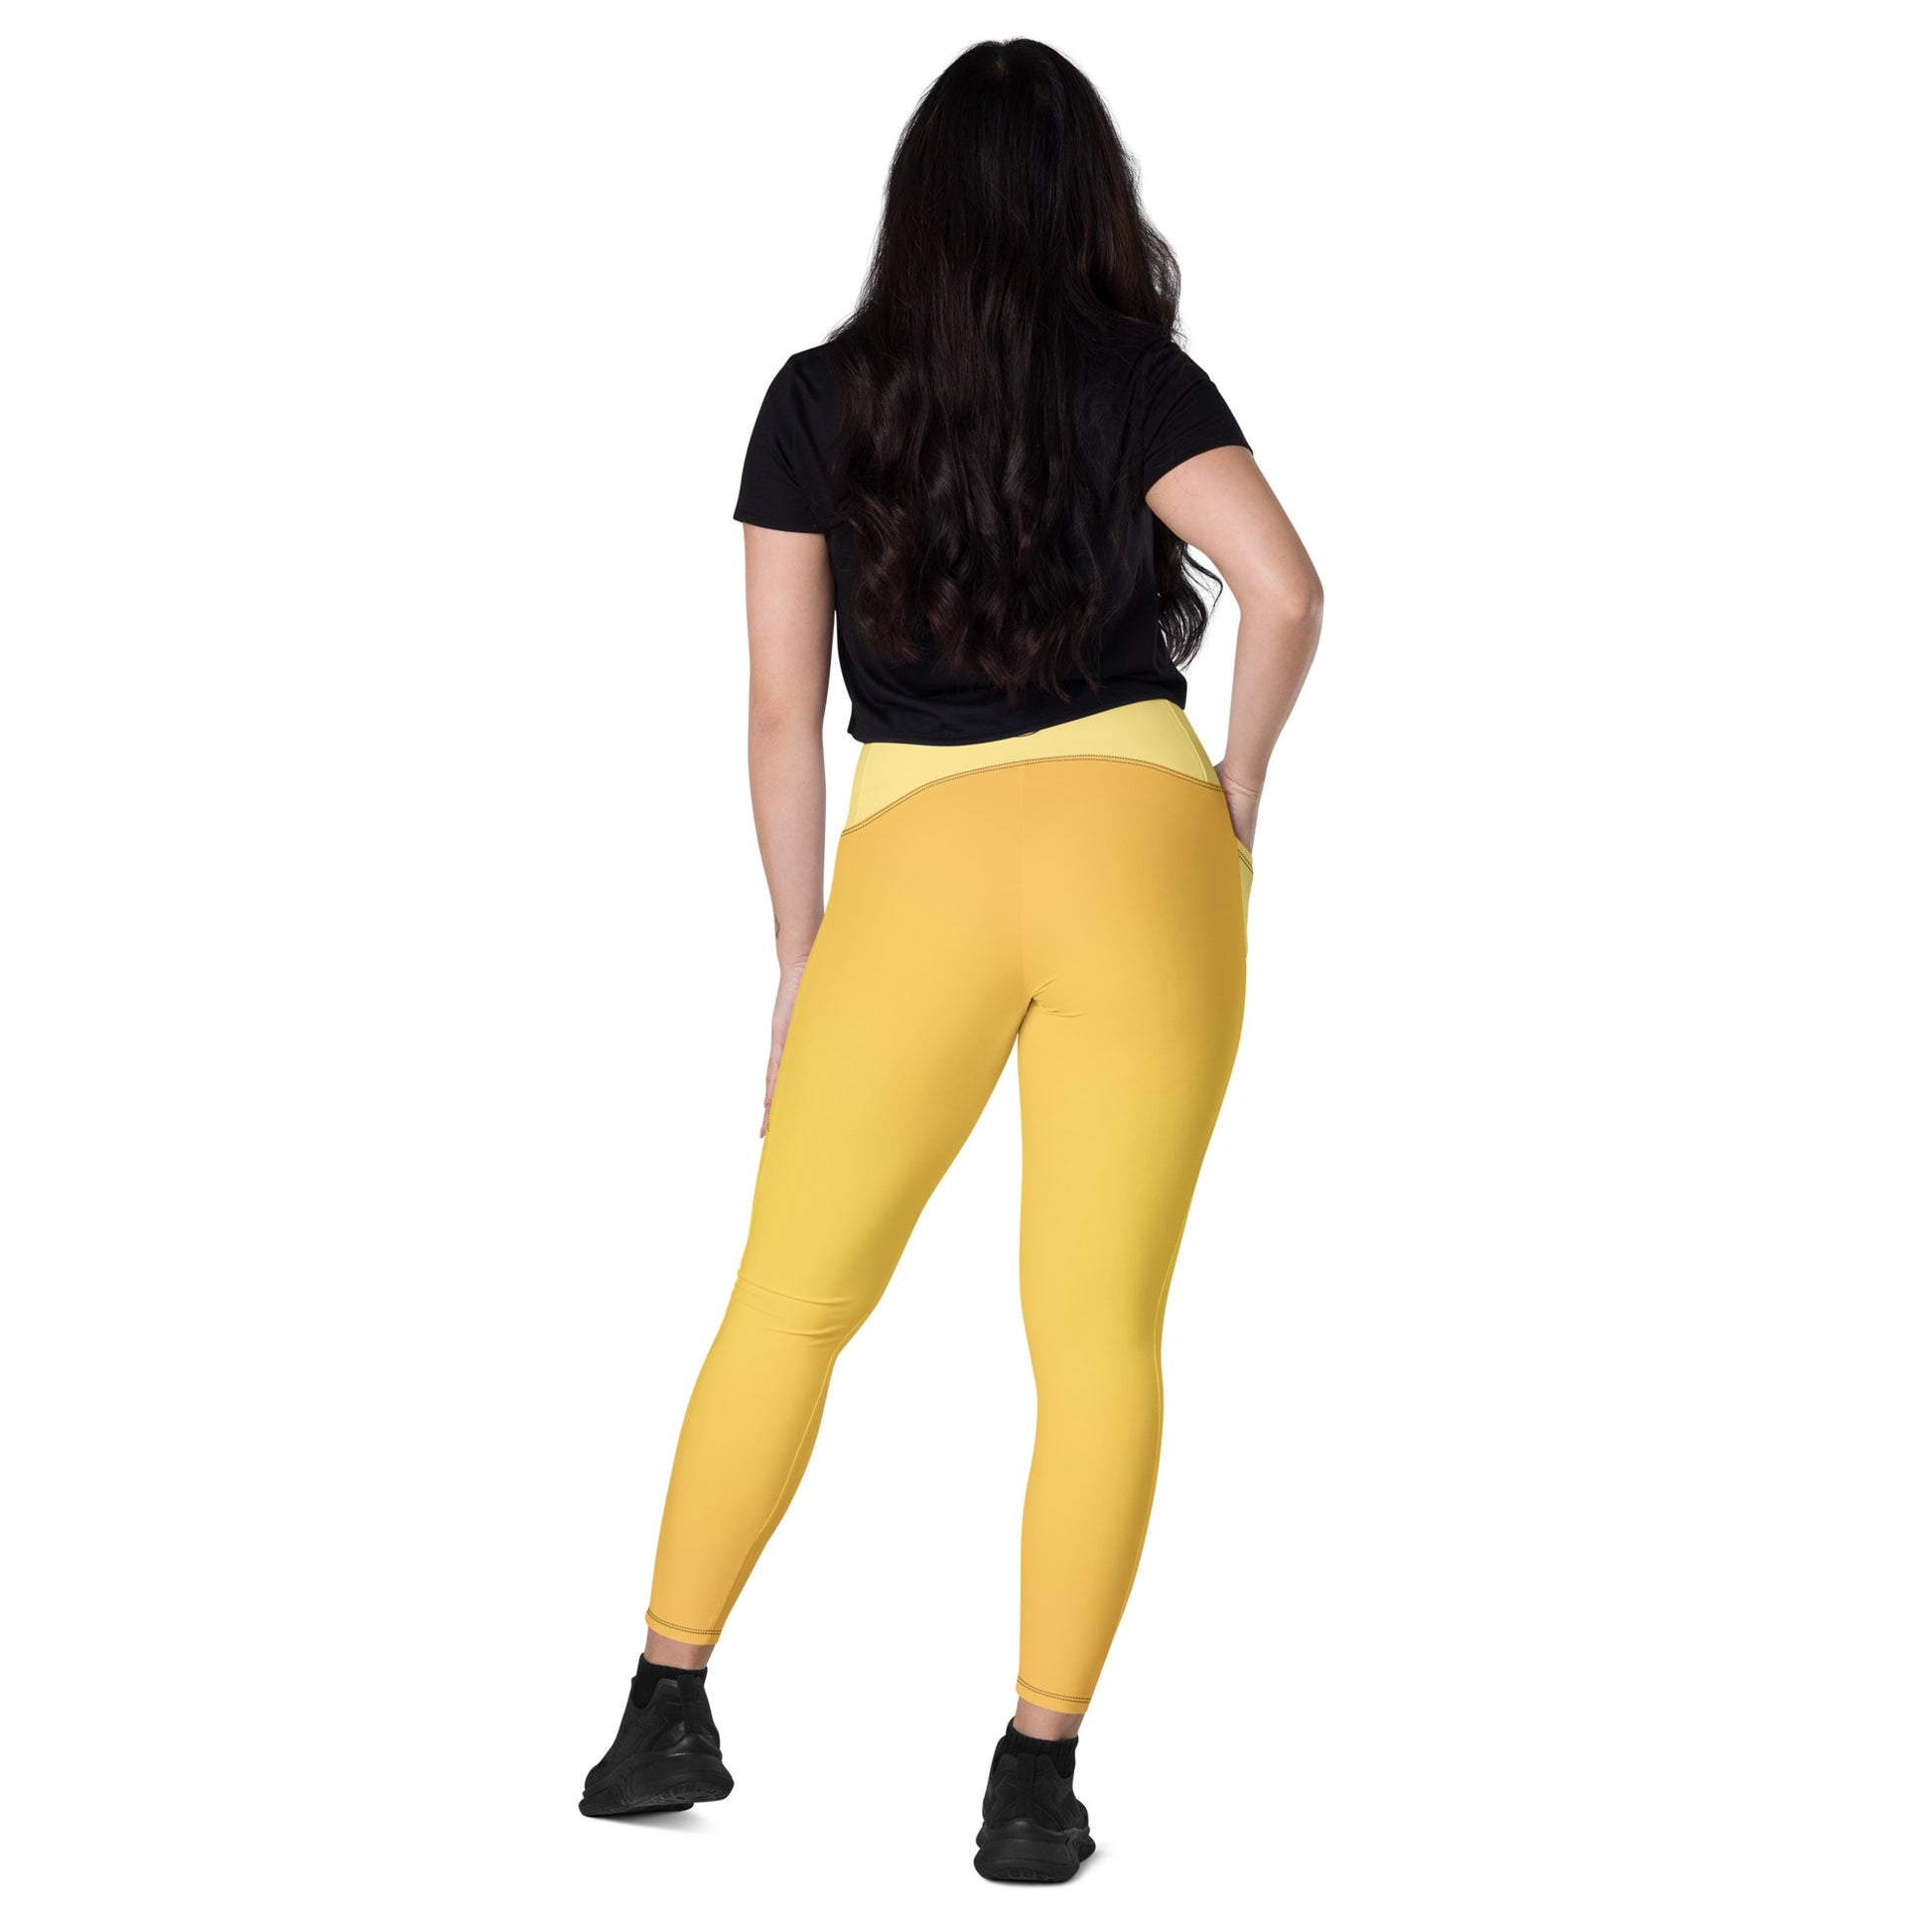 Humble Sportswear™ Women's Lemon Yellow Active Compression Leggings - Mireille Fine Art